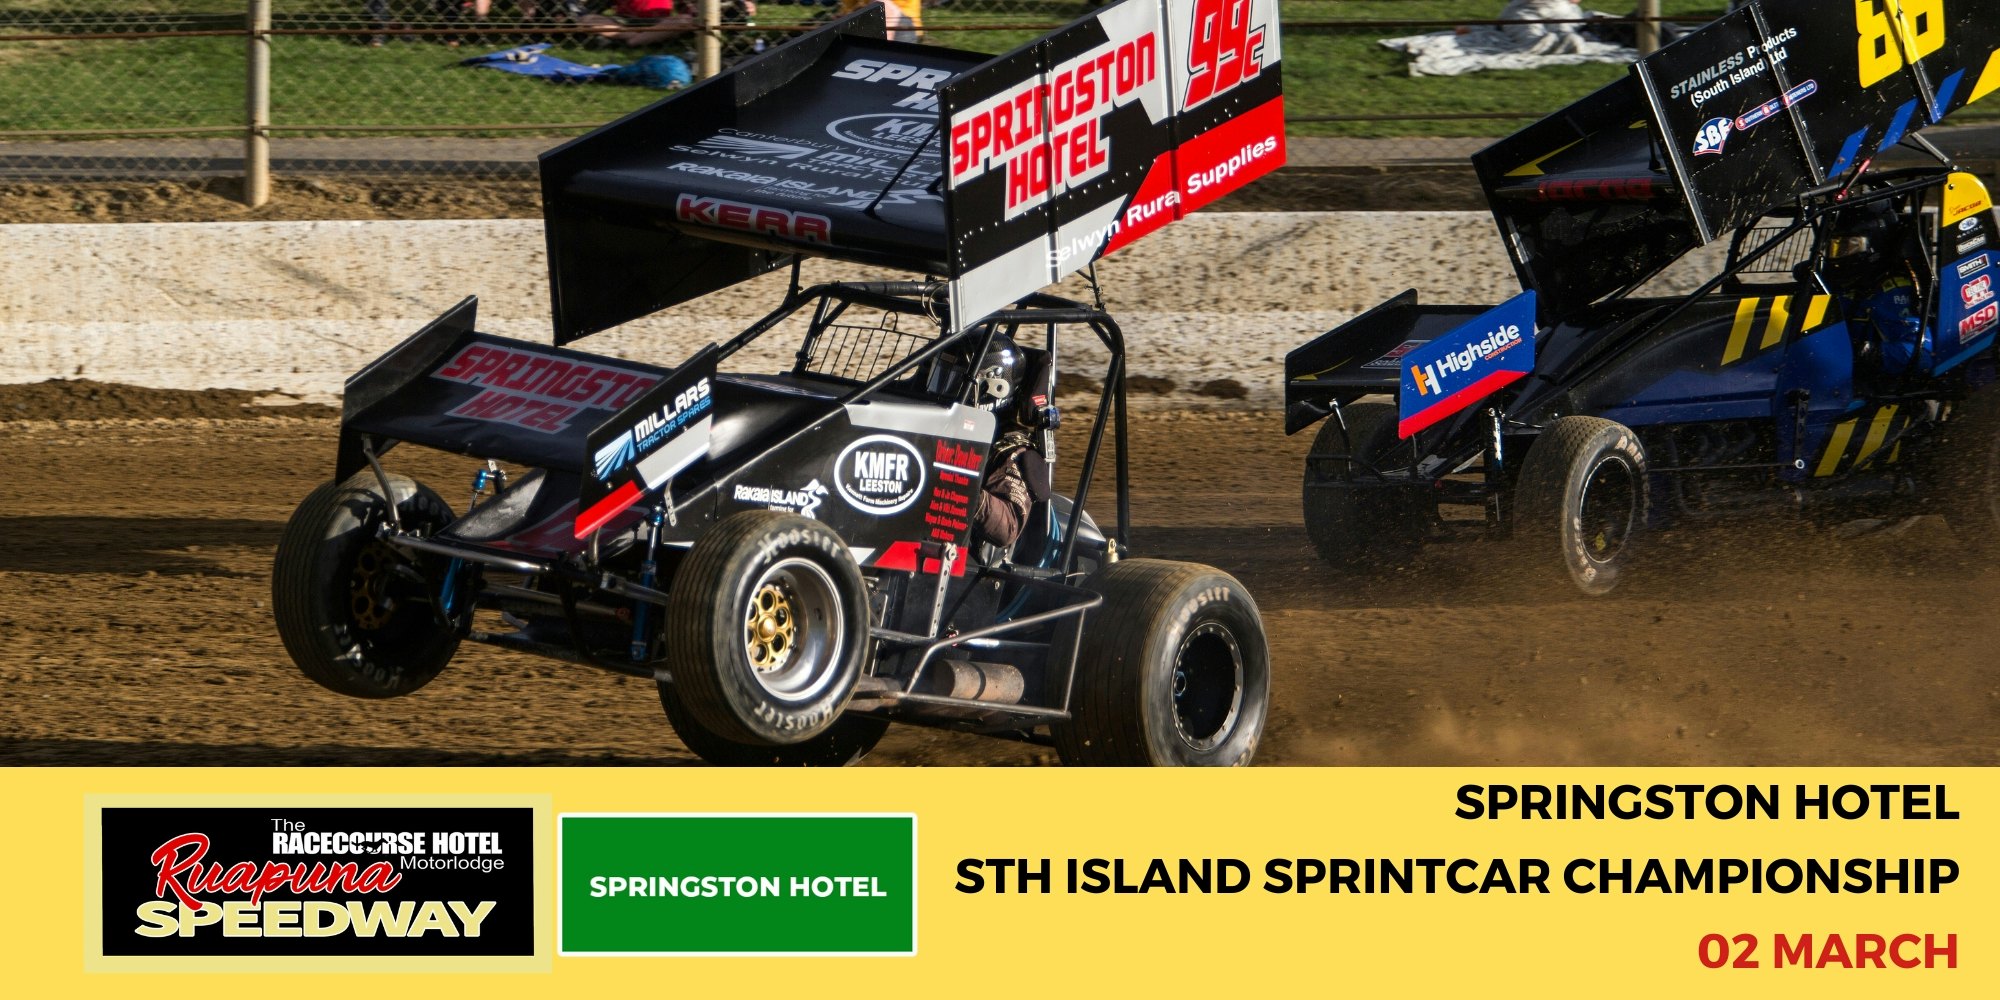 Springston Hotel South Island Sprintcar Championship